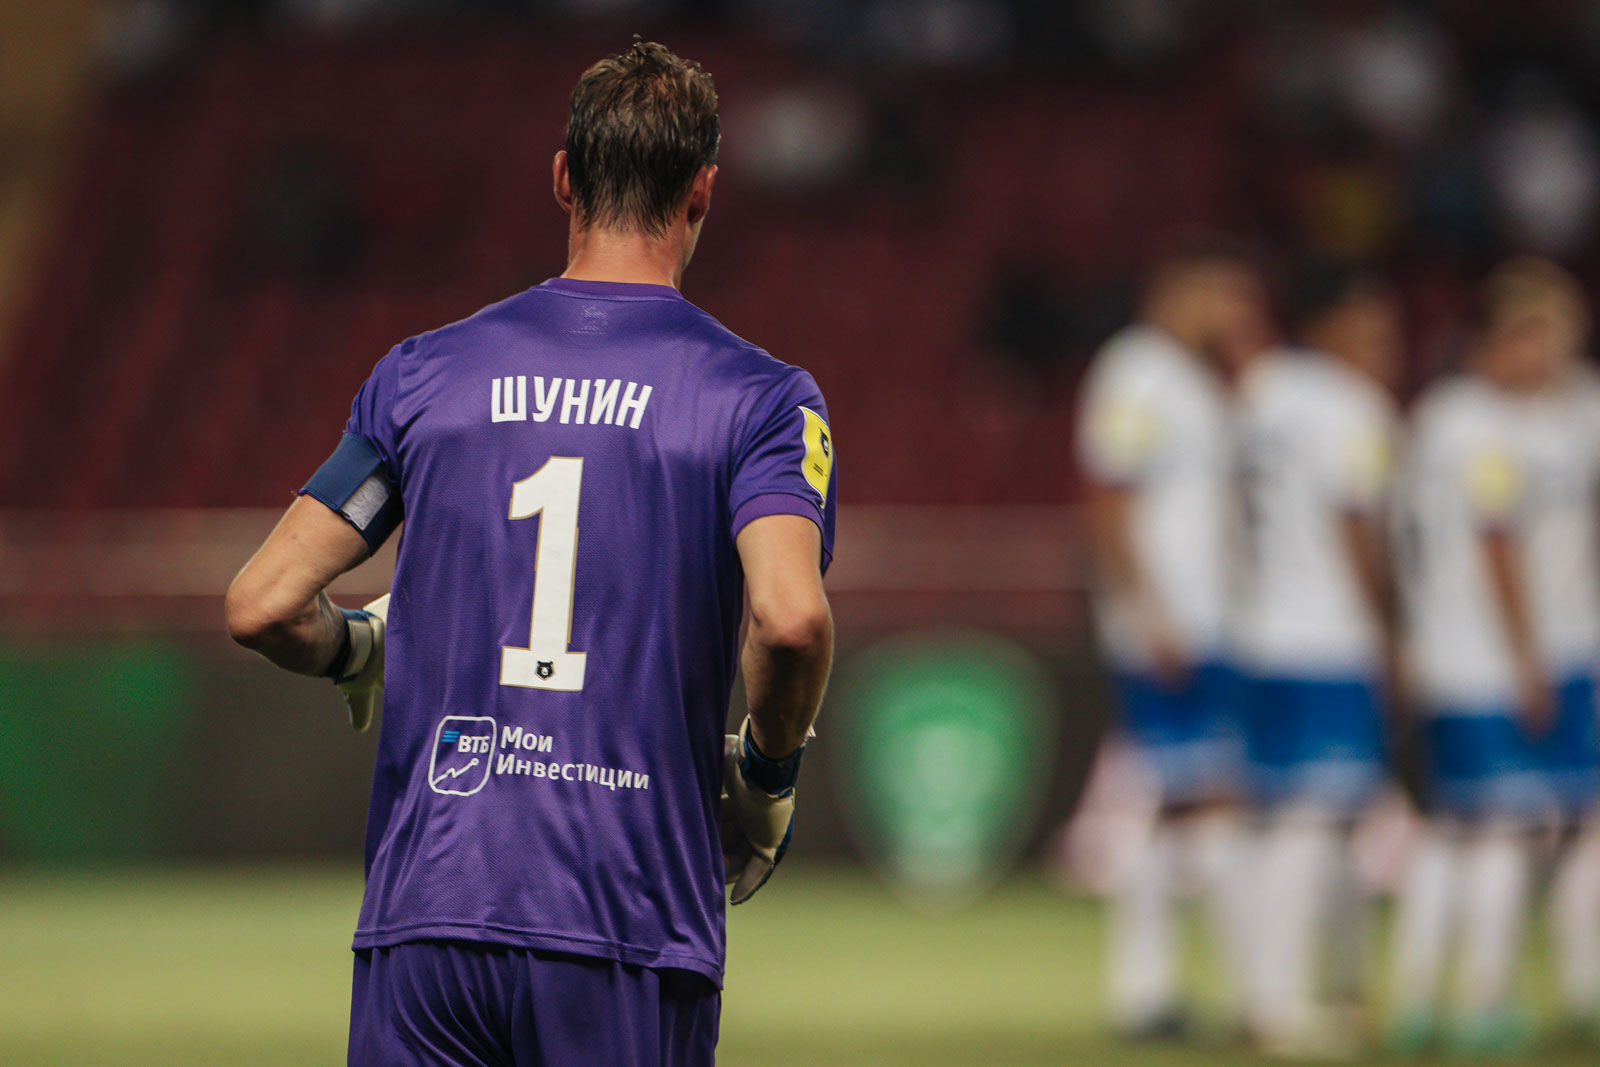 Dynamo Moscow team | Anton Shunin — goalkeeper. Dynamo Moscow official website